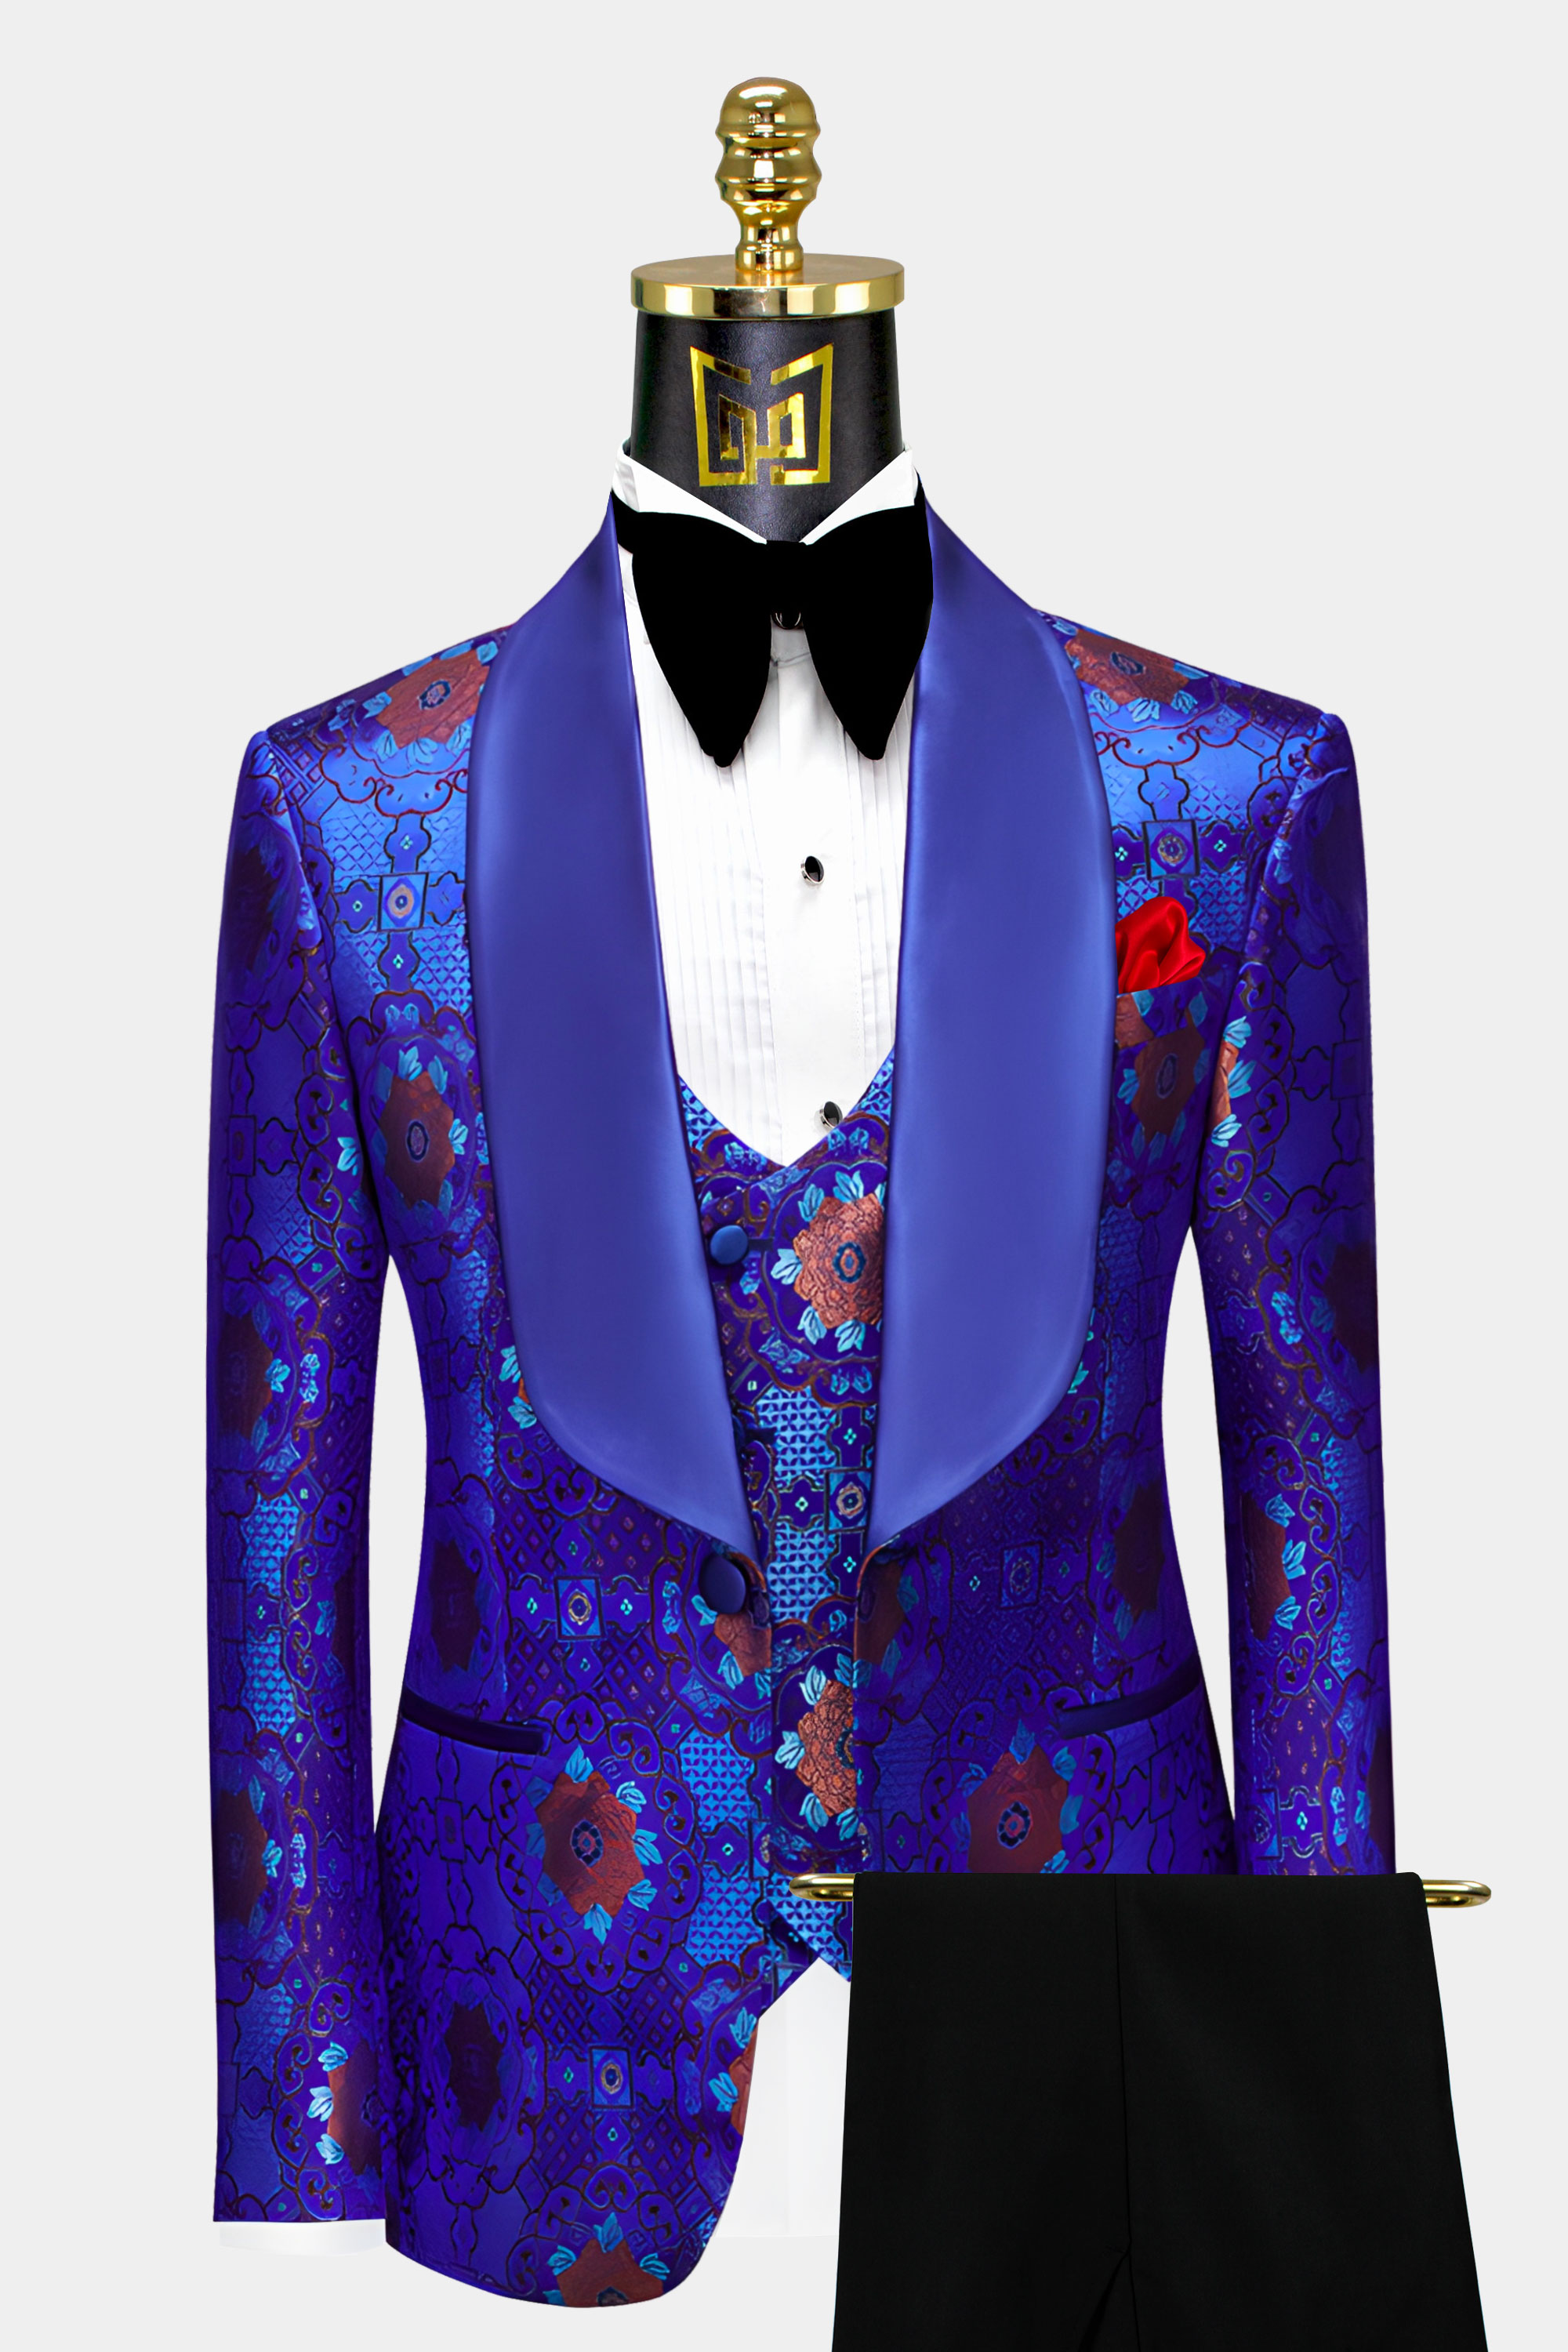 Mens-Royal-Blue-Embroidered-Tuxedo-Wedding-Suit-from-Gentlemansguru.com